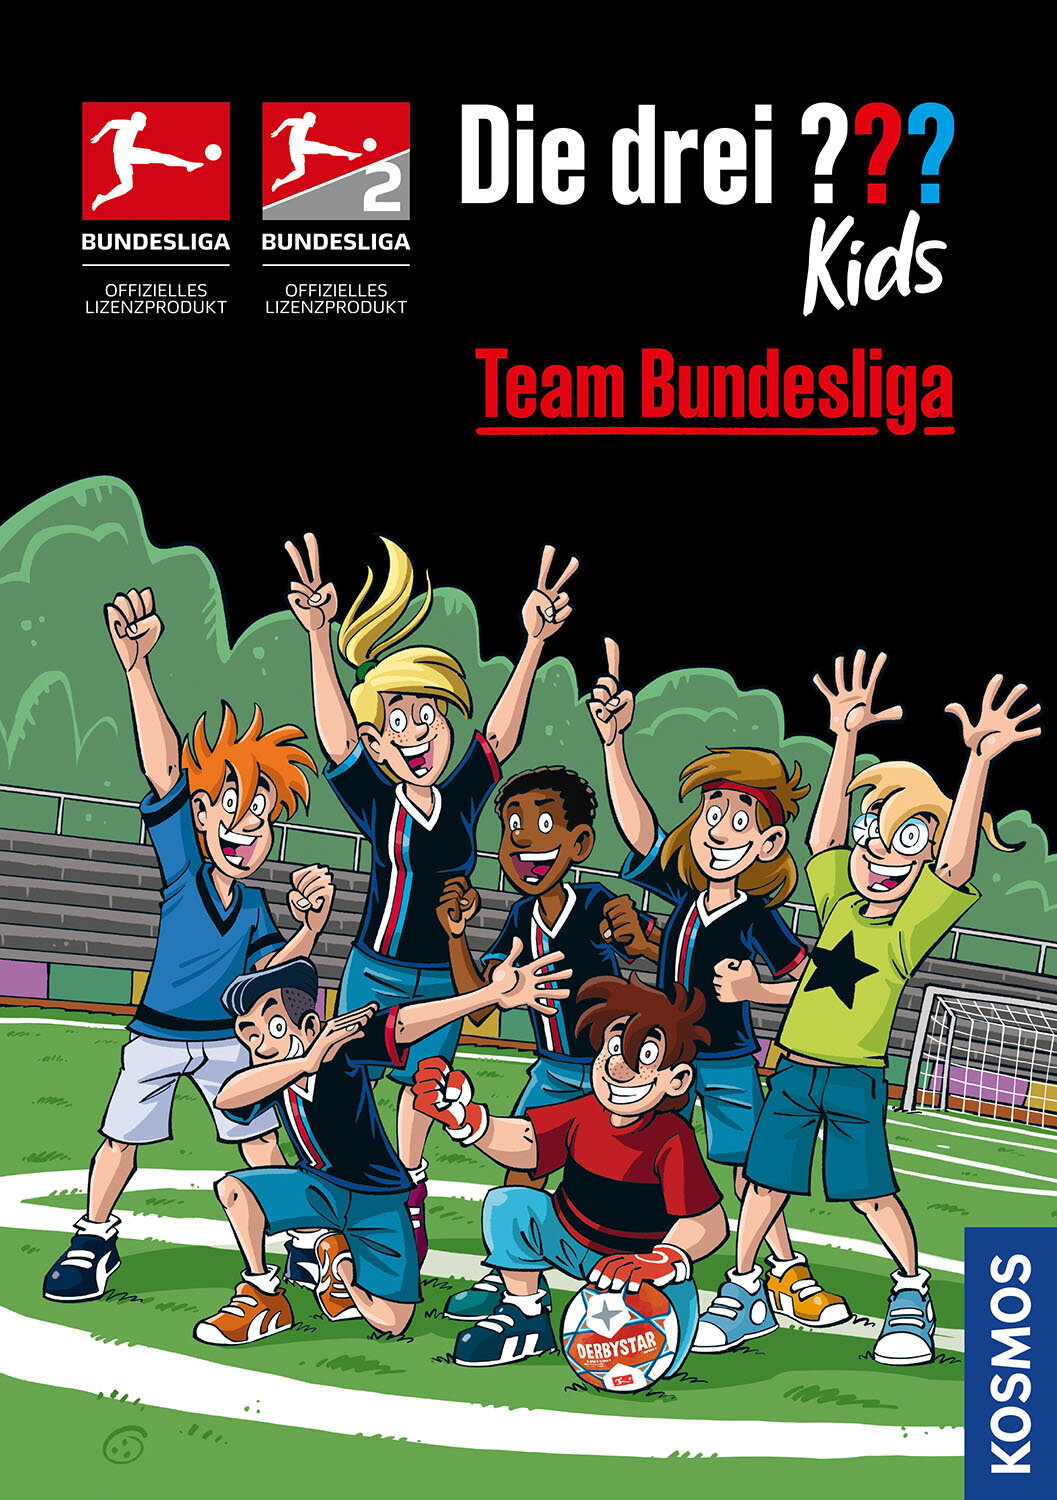 Die drei ??? Kids  Team Bundesliga